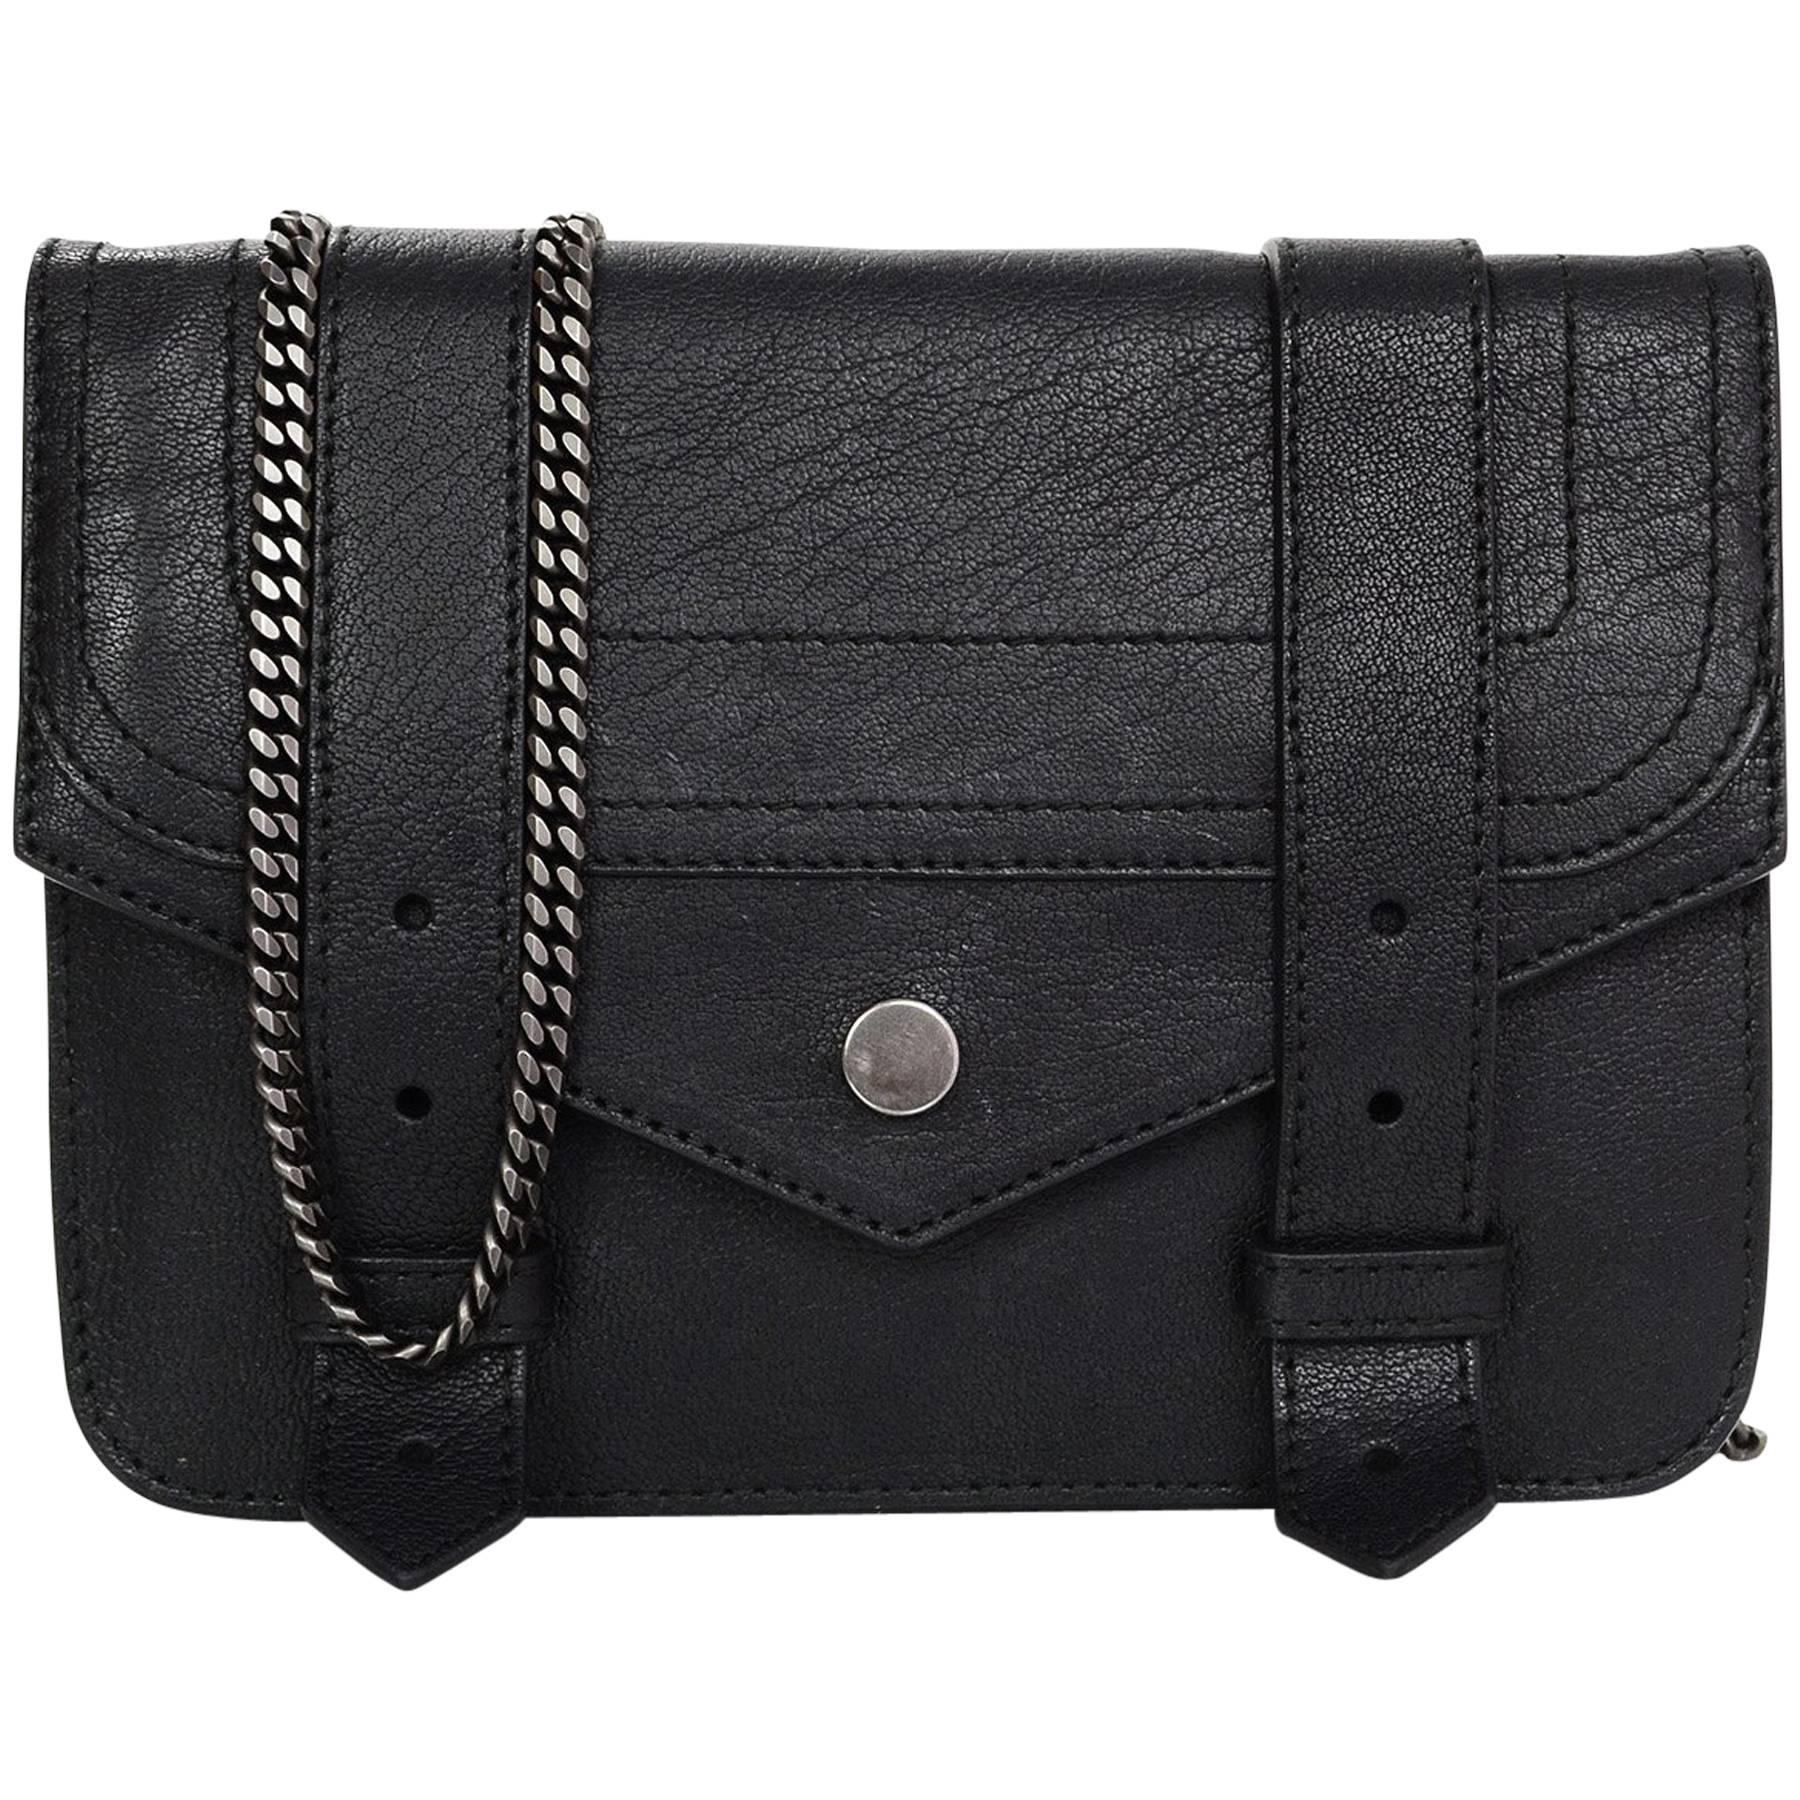 Proenza Schouler Black Leather PS1 Large Chain Wallet WOC Crossbody Bag